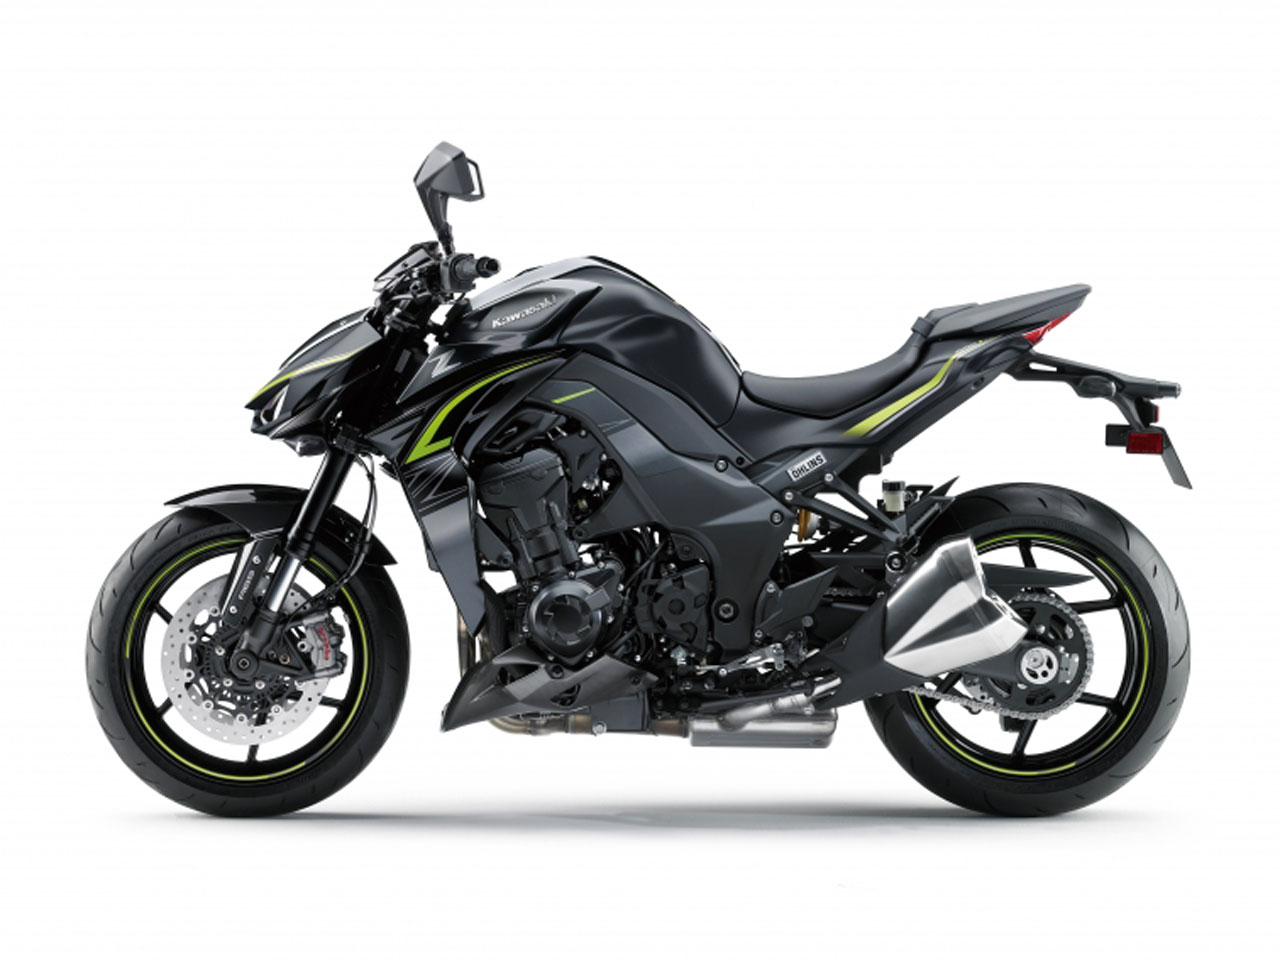 2019 Kawasaki Z1000R ABS Guide • Total Motorcycle